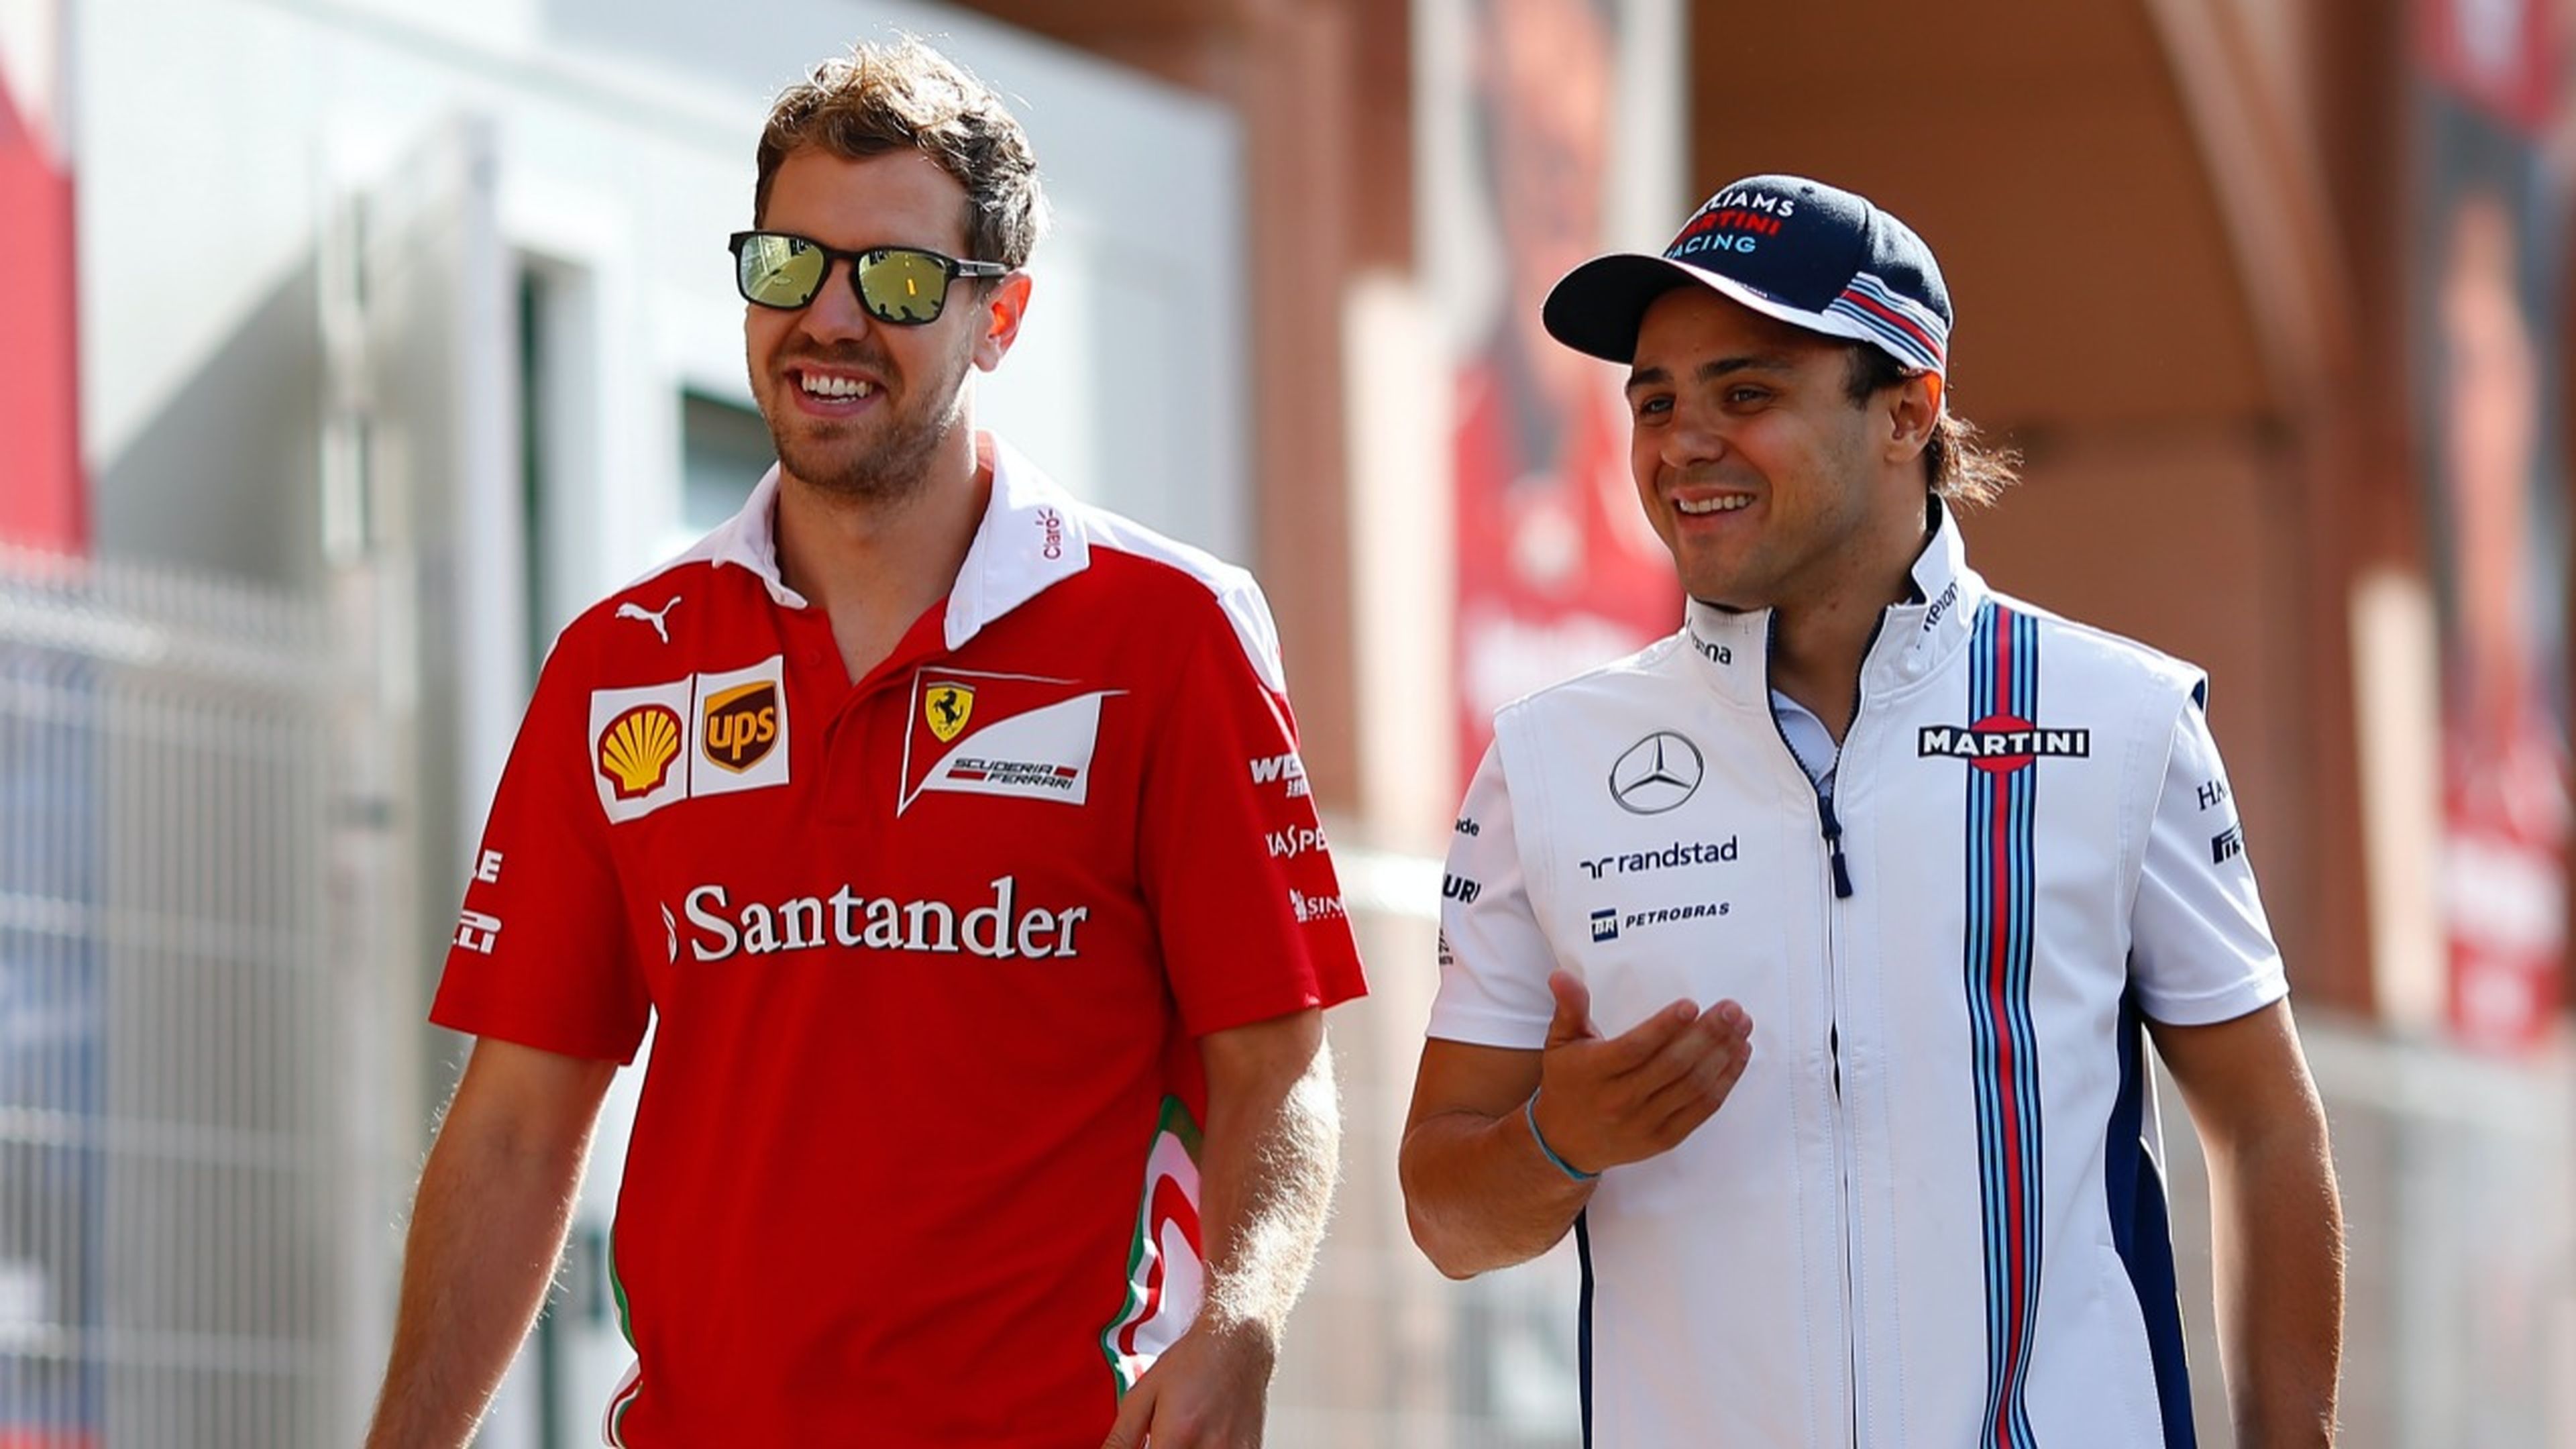 Massa y Vettel